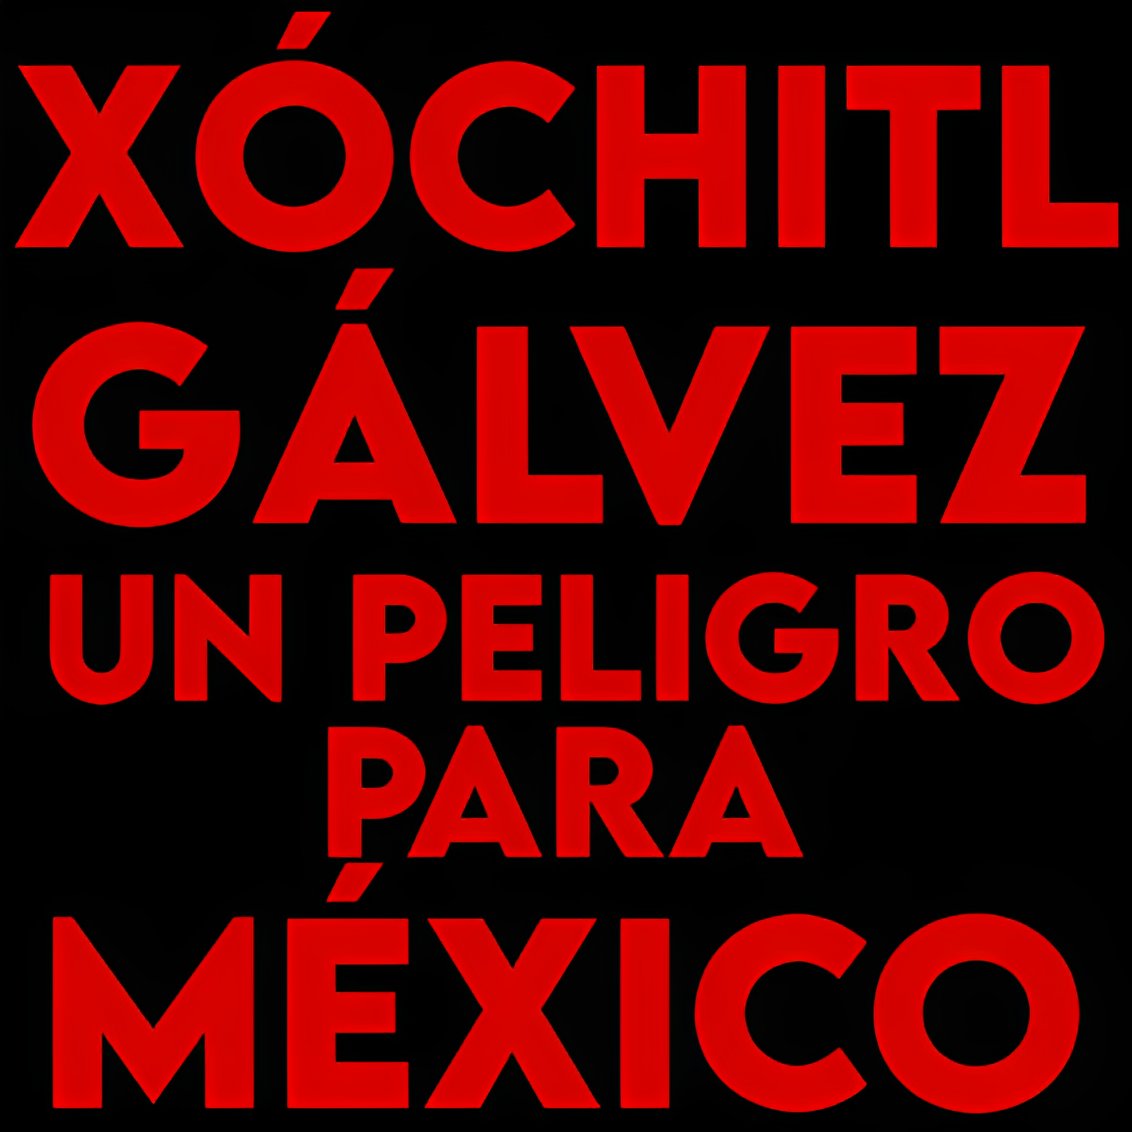 🔴 👇 #SomosMillonesConLa4T 
#SomosMillonesConAMLO 
#PrensaBasuraYCorrupta 
#XochitlCorrupta
#PlanC_YaEstaEnMarcha
#TodosConAMLO 
#TodosConMexico 
#ClaudiaGanaElDebate #Nacional 
#BotargaBrutaYCogupta #XochitlMentirosa #XochitlGalvezPresidenta #XochitlYaPerdio